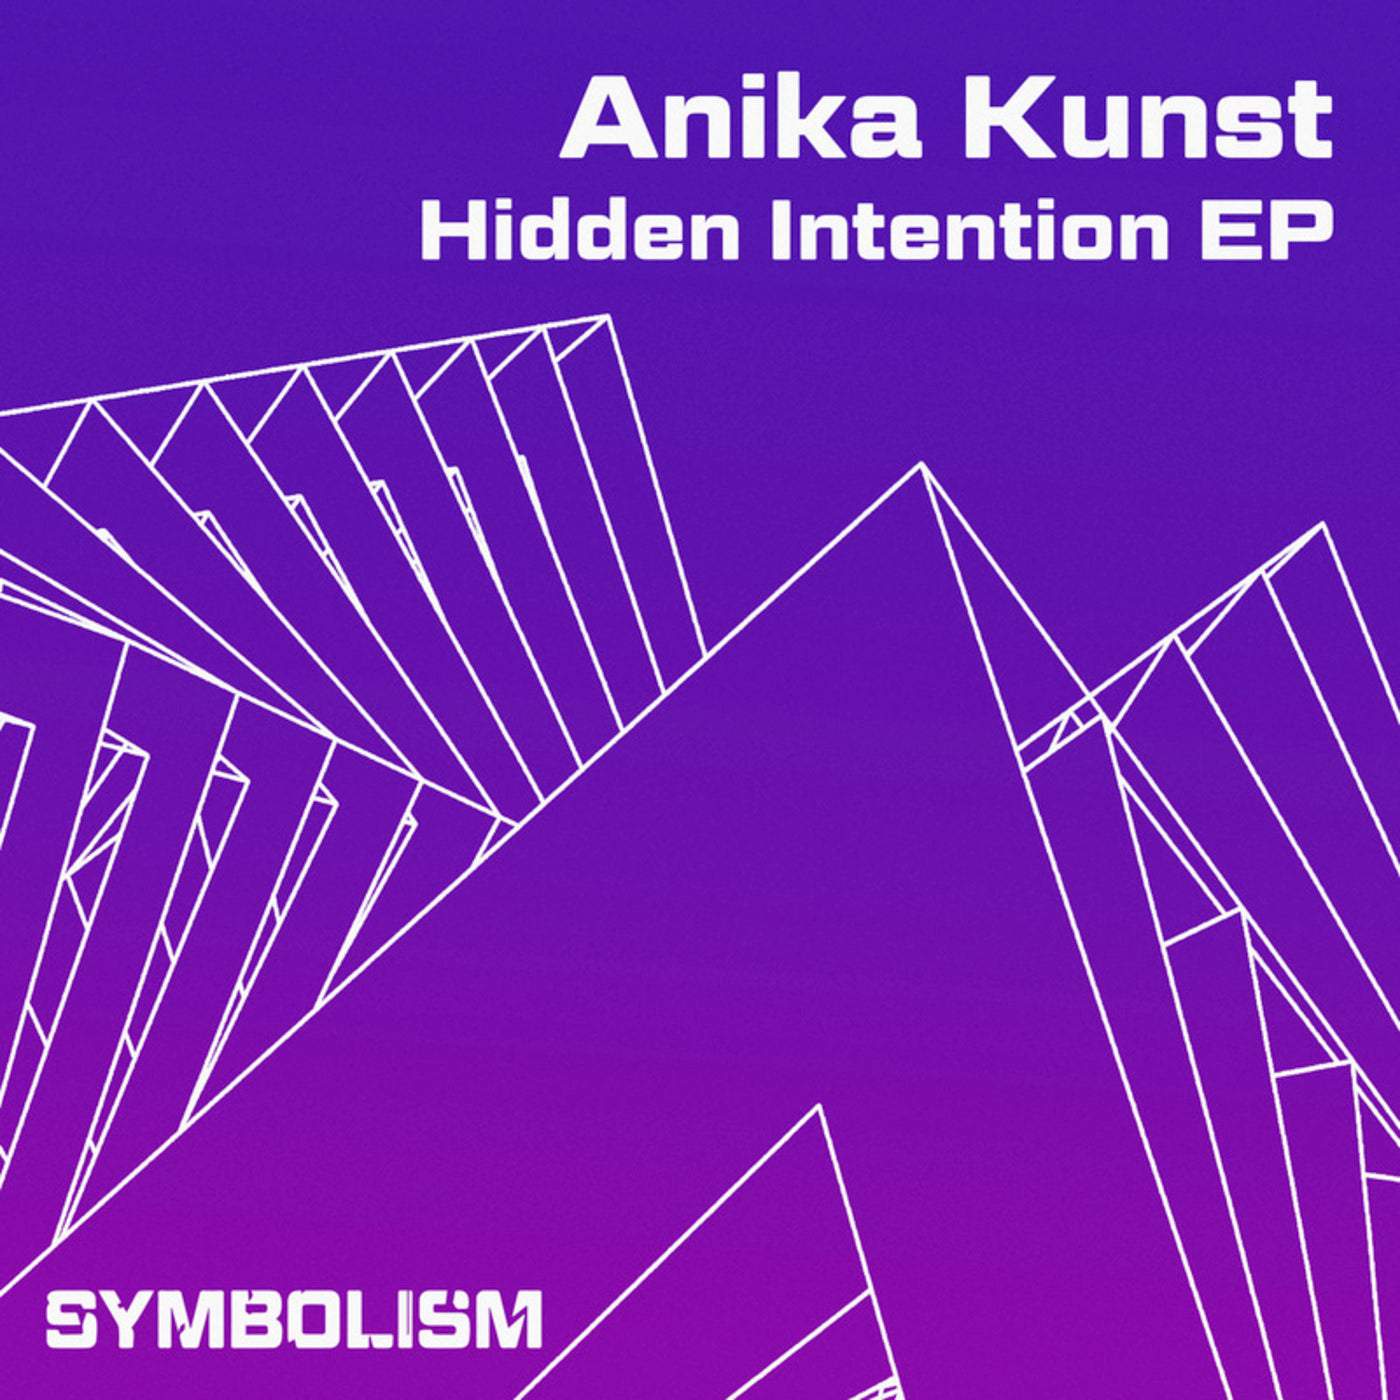 image cover: Anika Kunst - Hidden Intention EP / SYMDIGI014